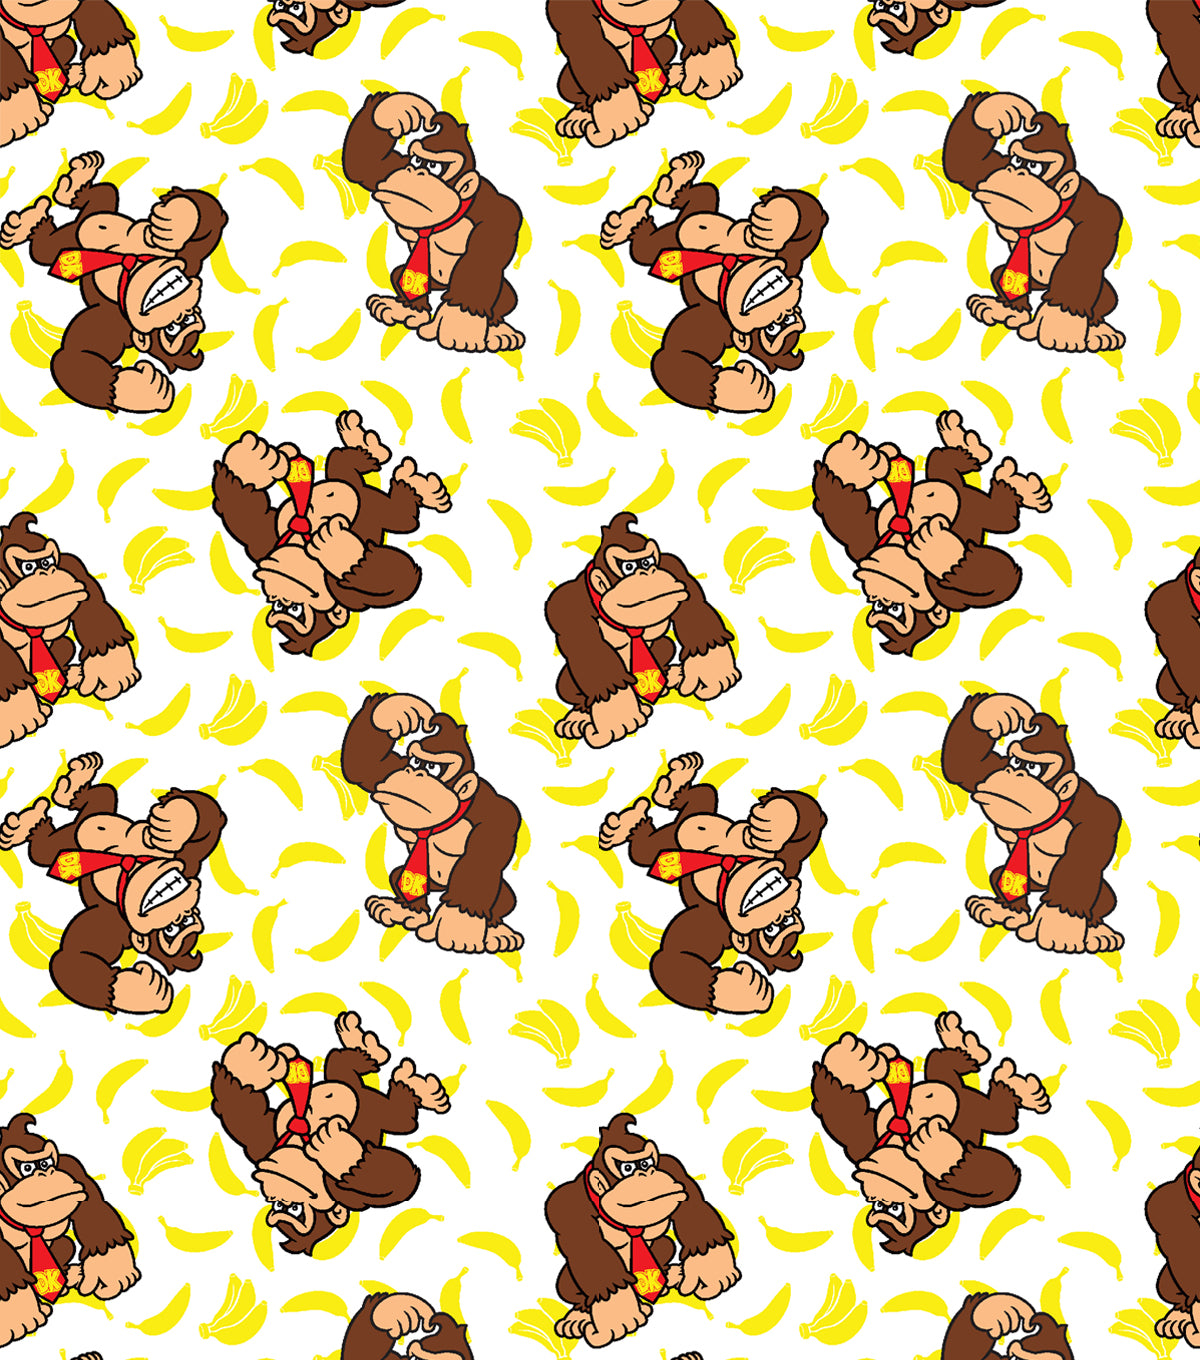 Nintendo Donkey Kong Character Fabric